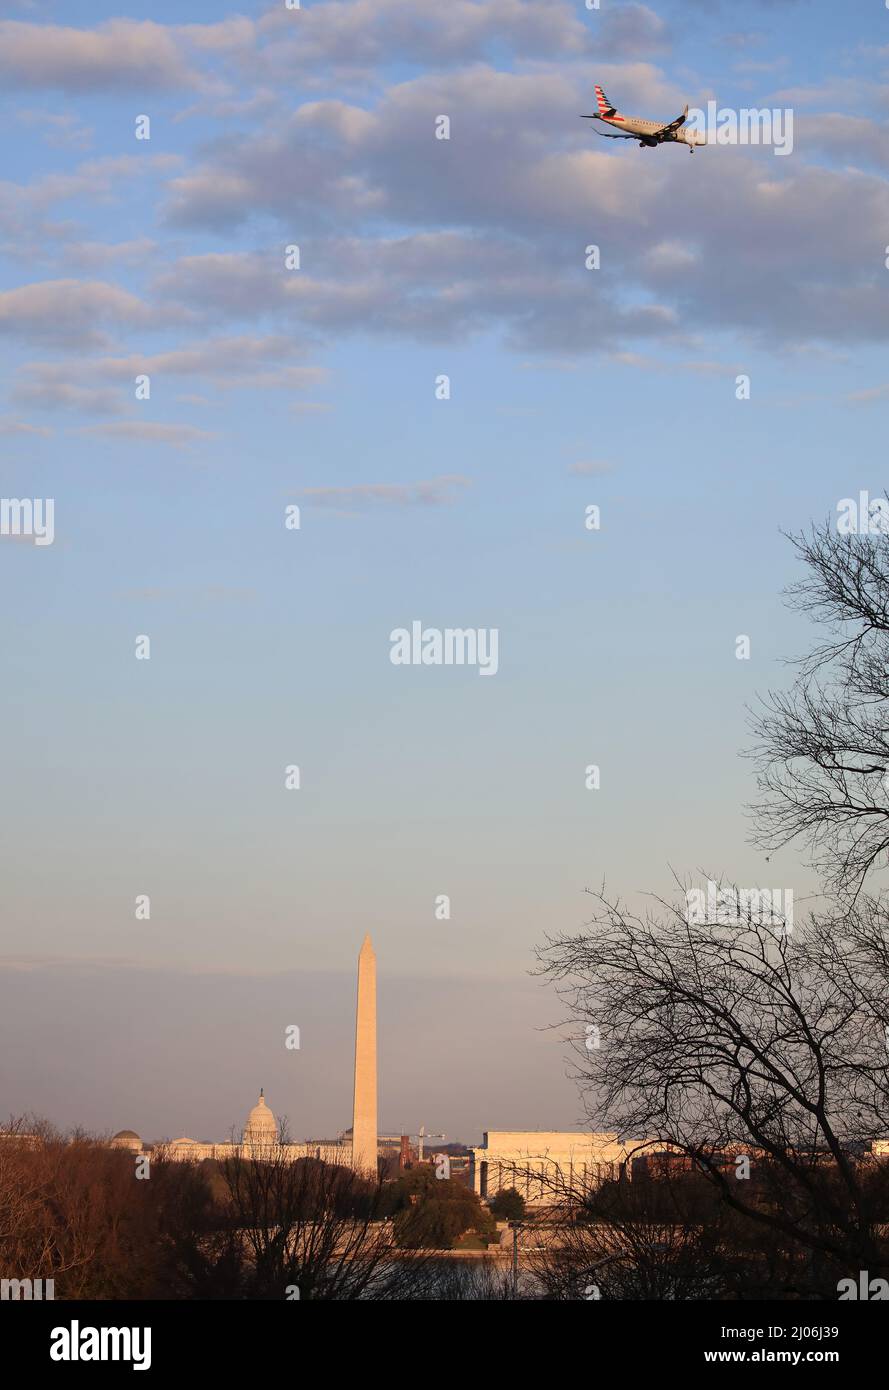 Washington DC skyline at Sunset, featuring the US Capitol building, Lincoln Memorial, the Washington Monument - Washington DC, USA. Stock Photo